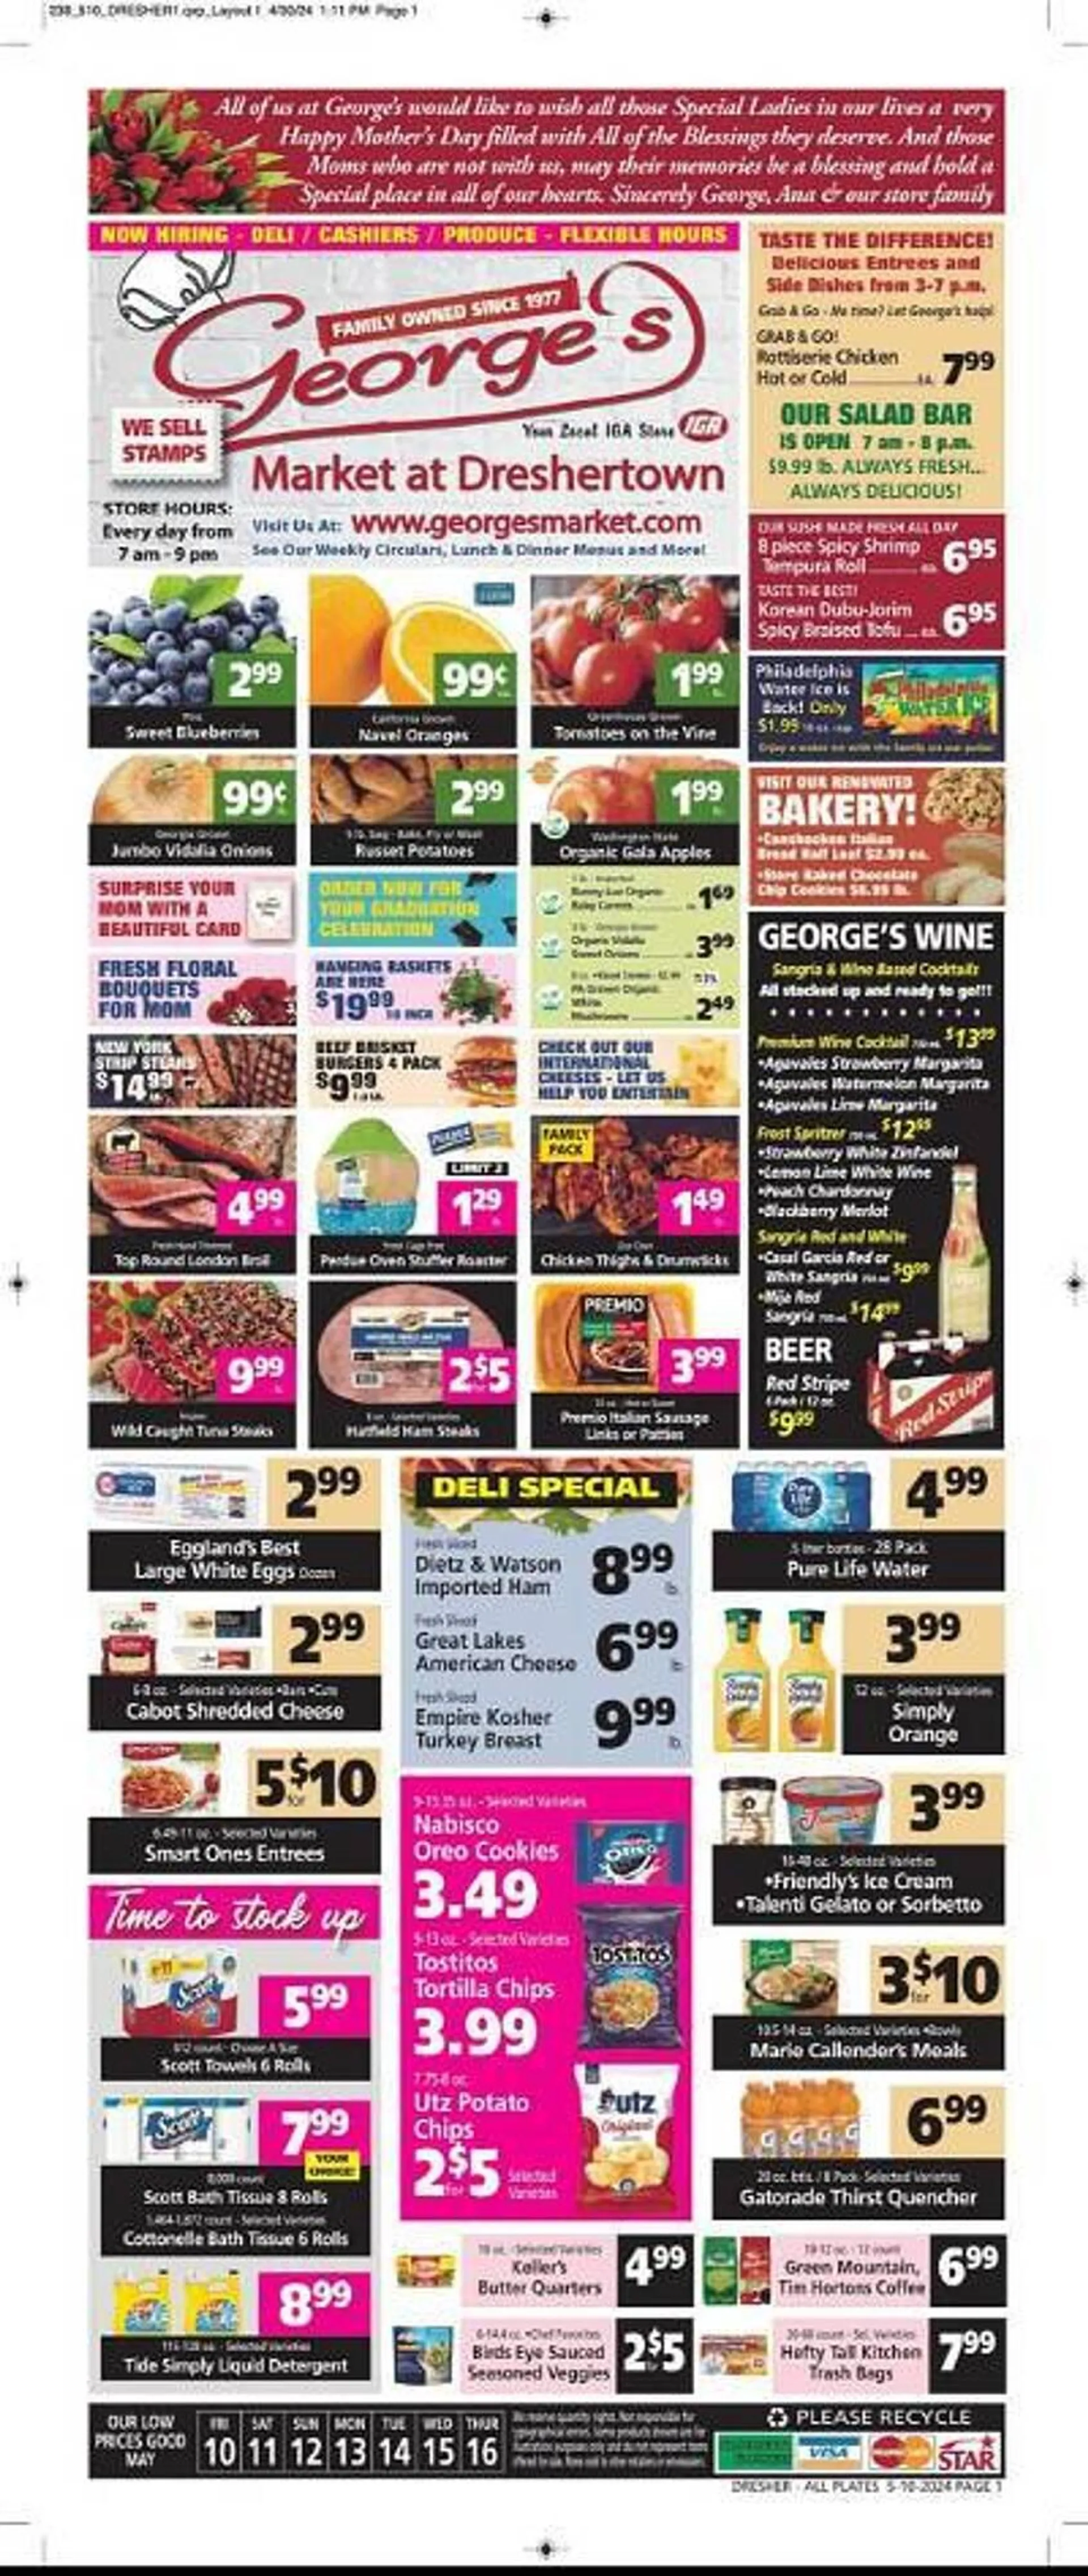 Georges Market Weekly Ad - 1